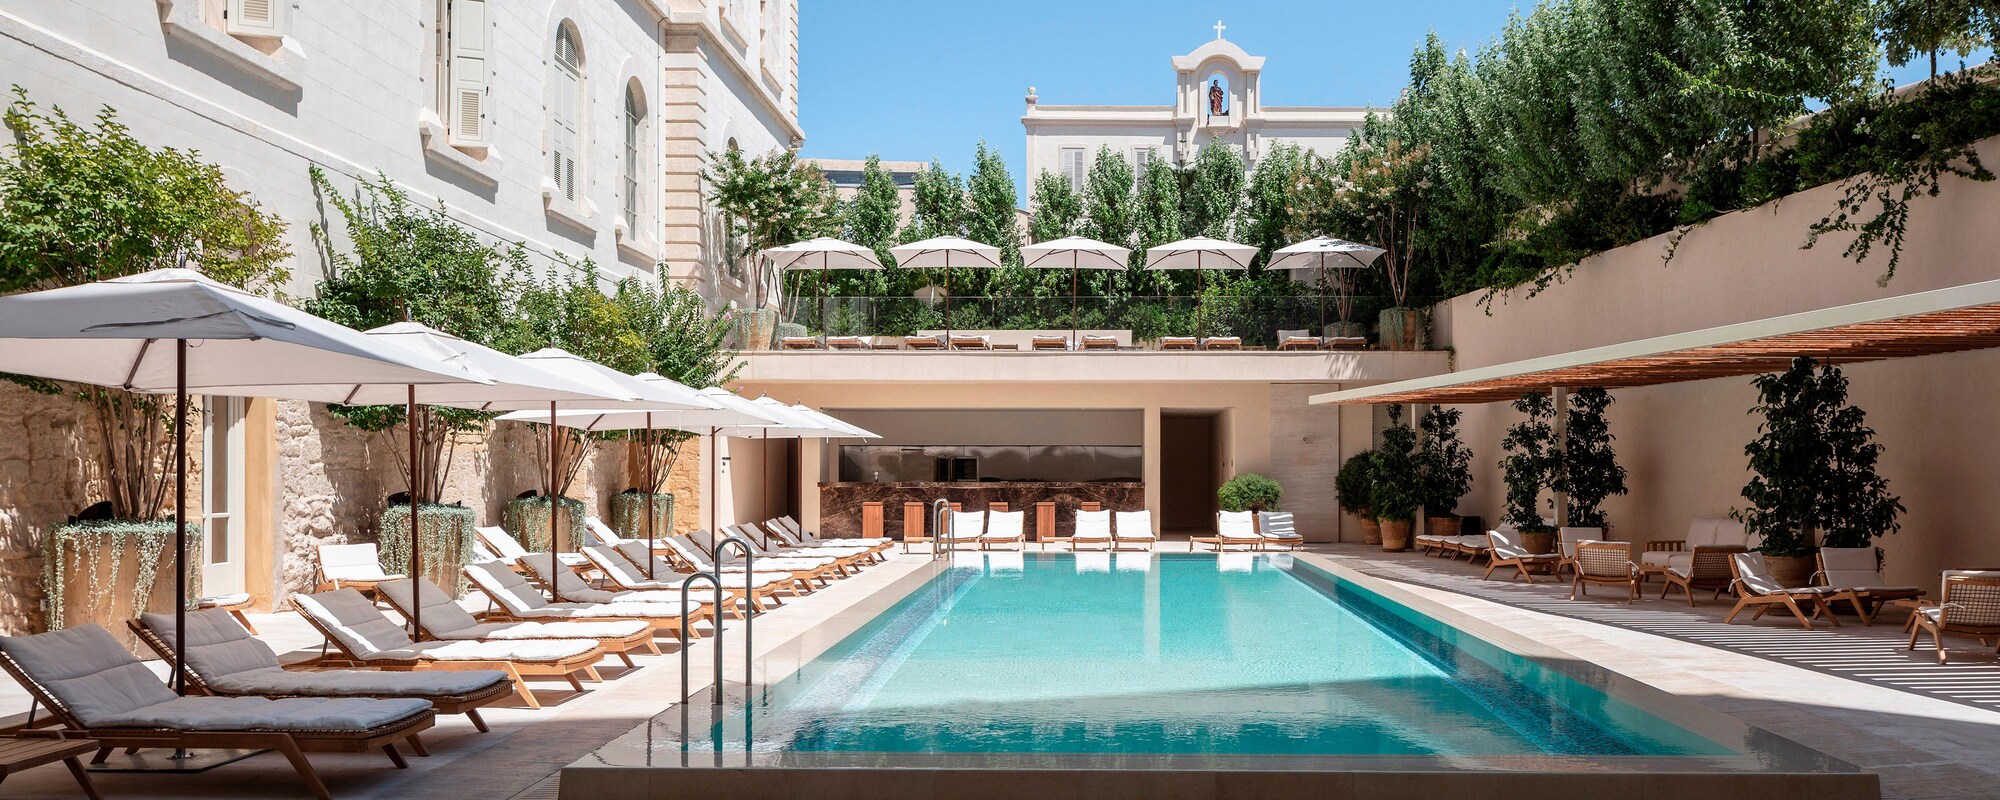 Luxury Hotel in Tel Aviv | The Jaffa, a Luxury Collection Hotel, Tel Aviv